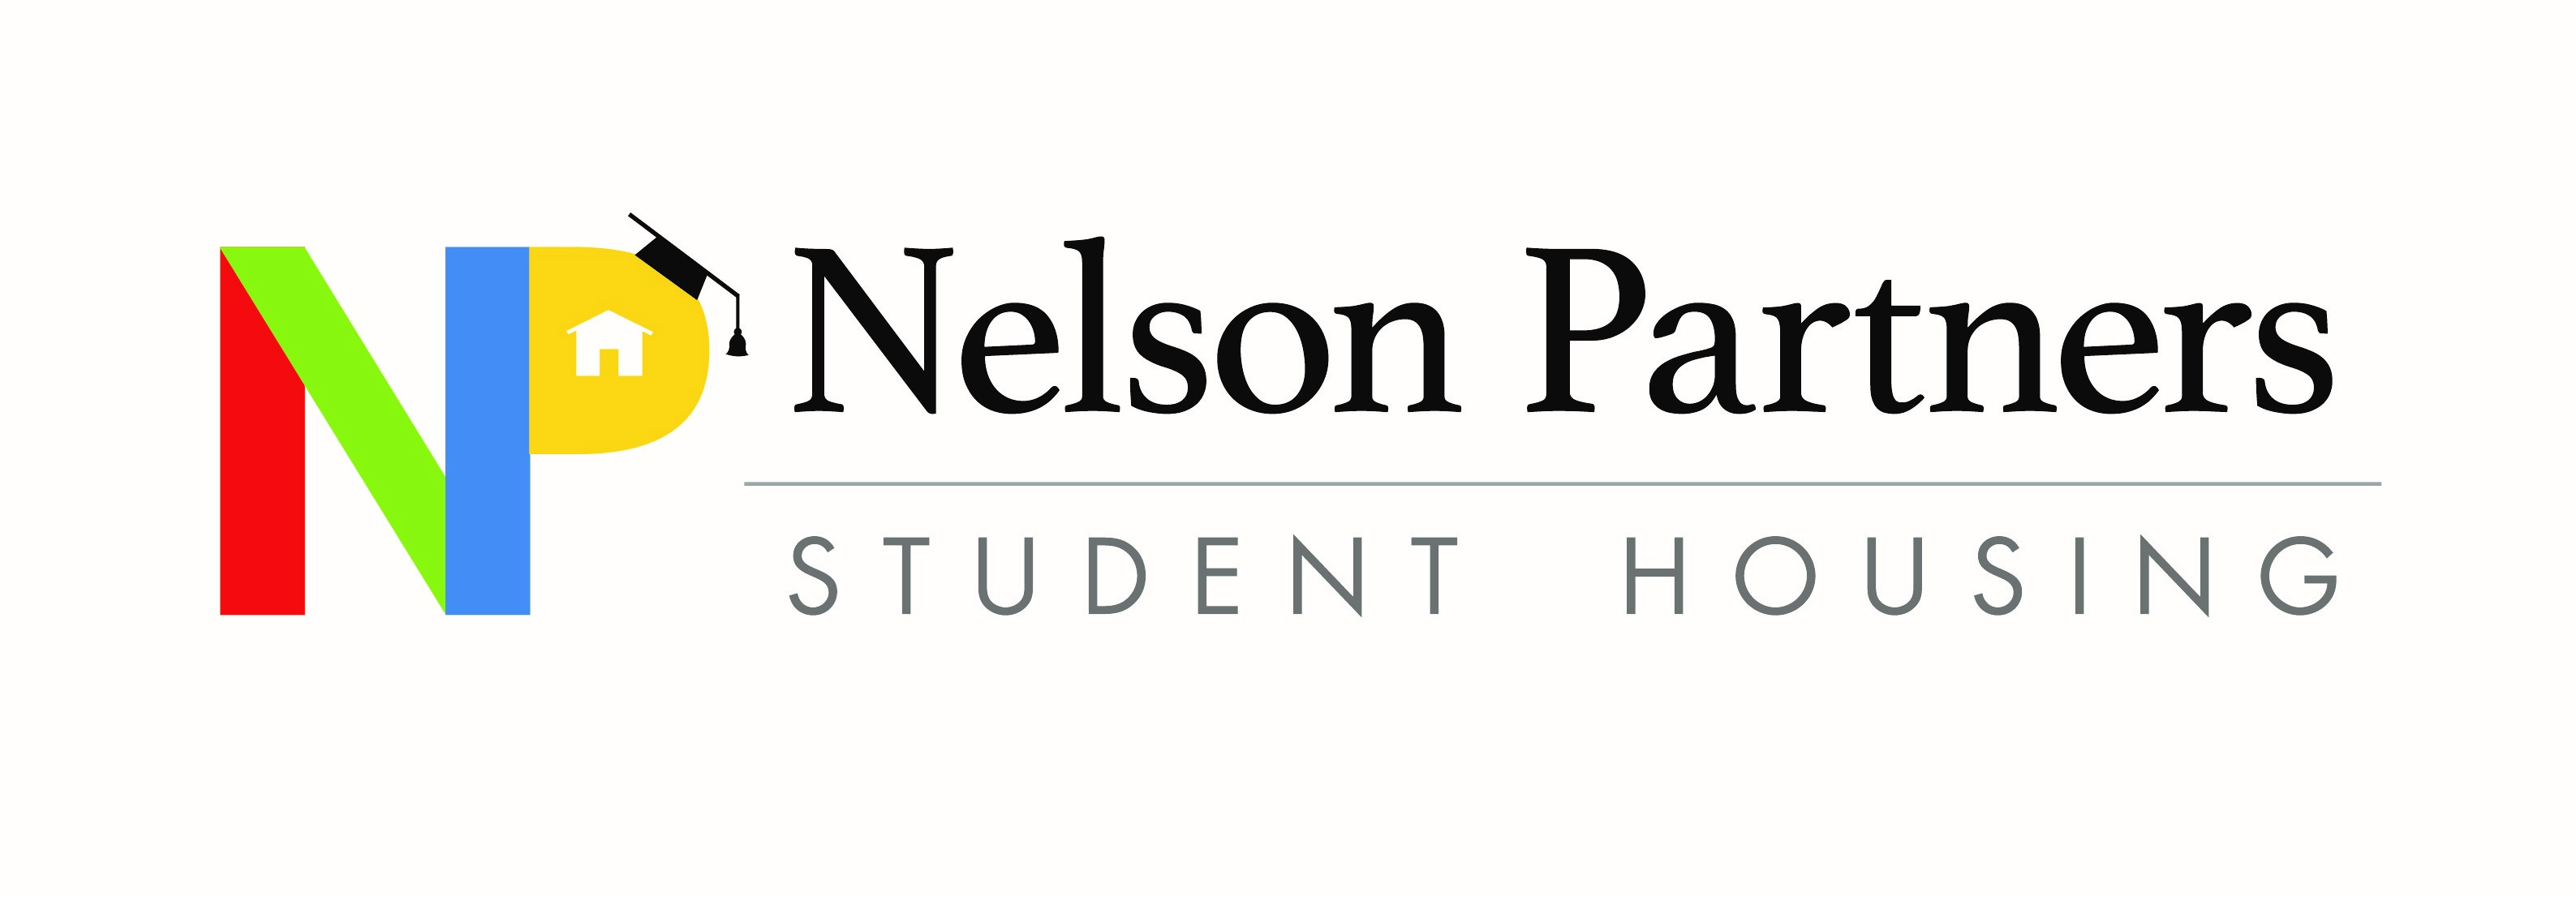 Nelson Partners logo